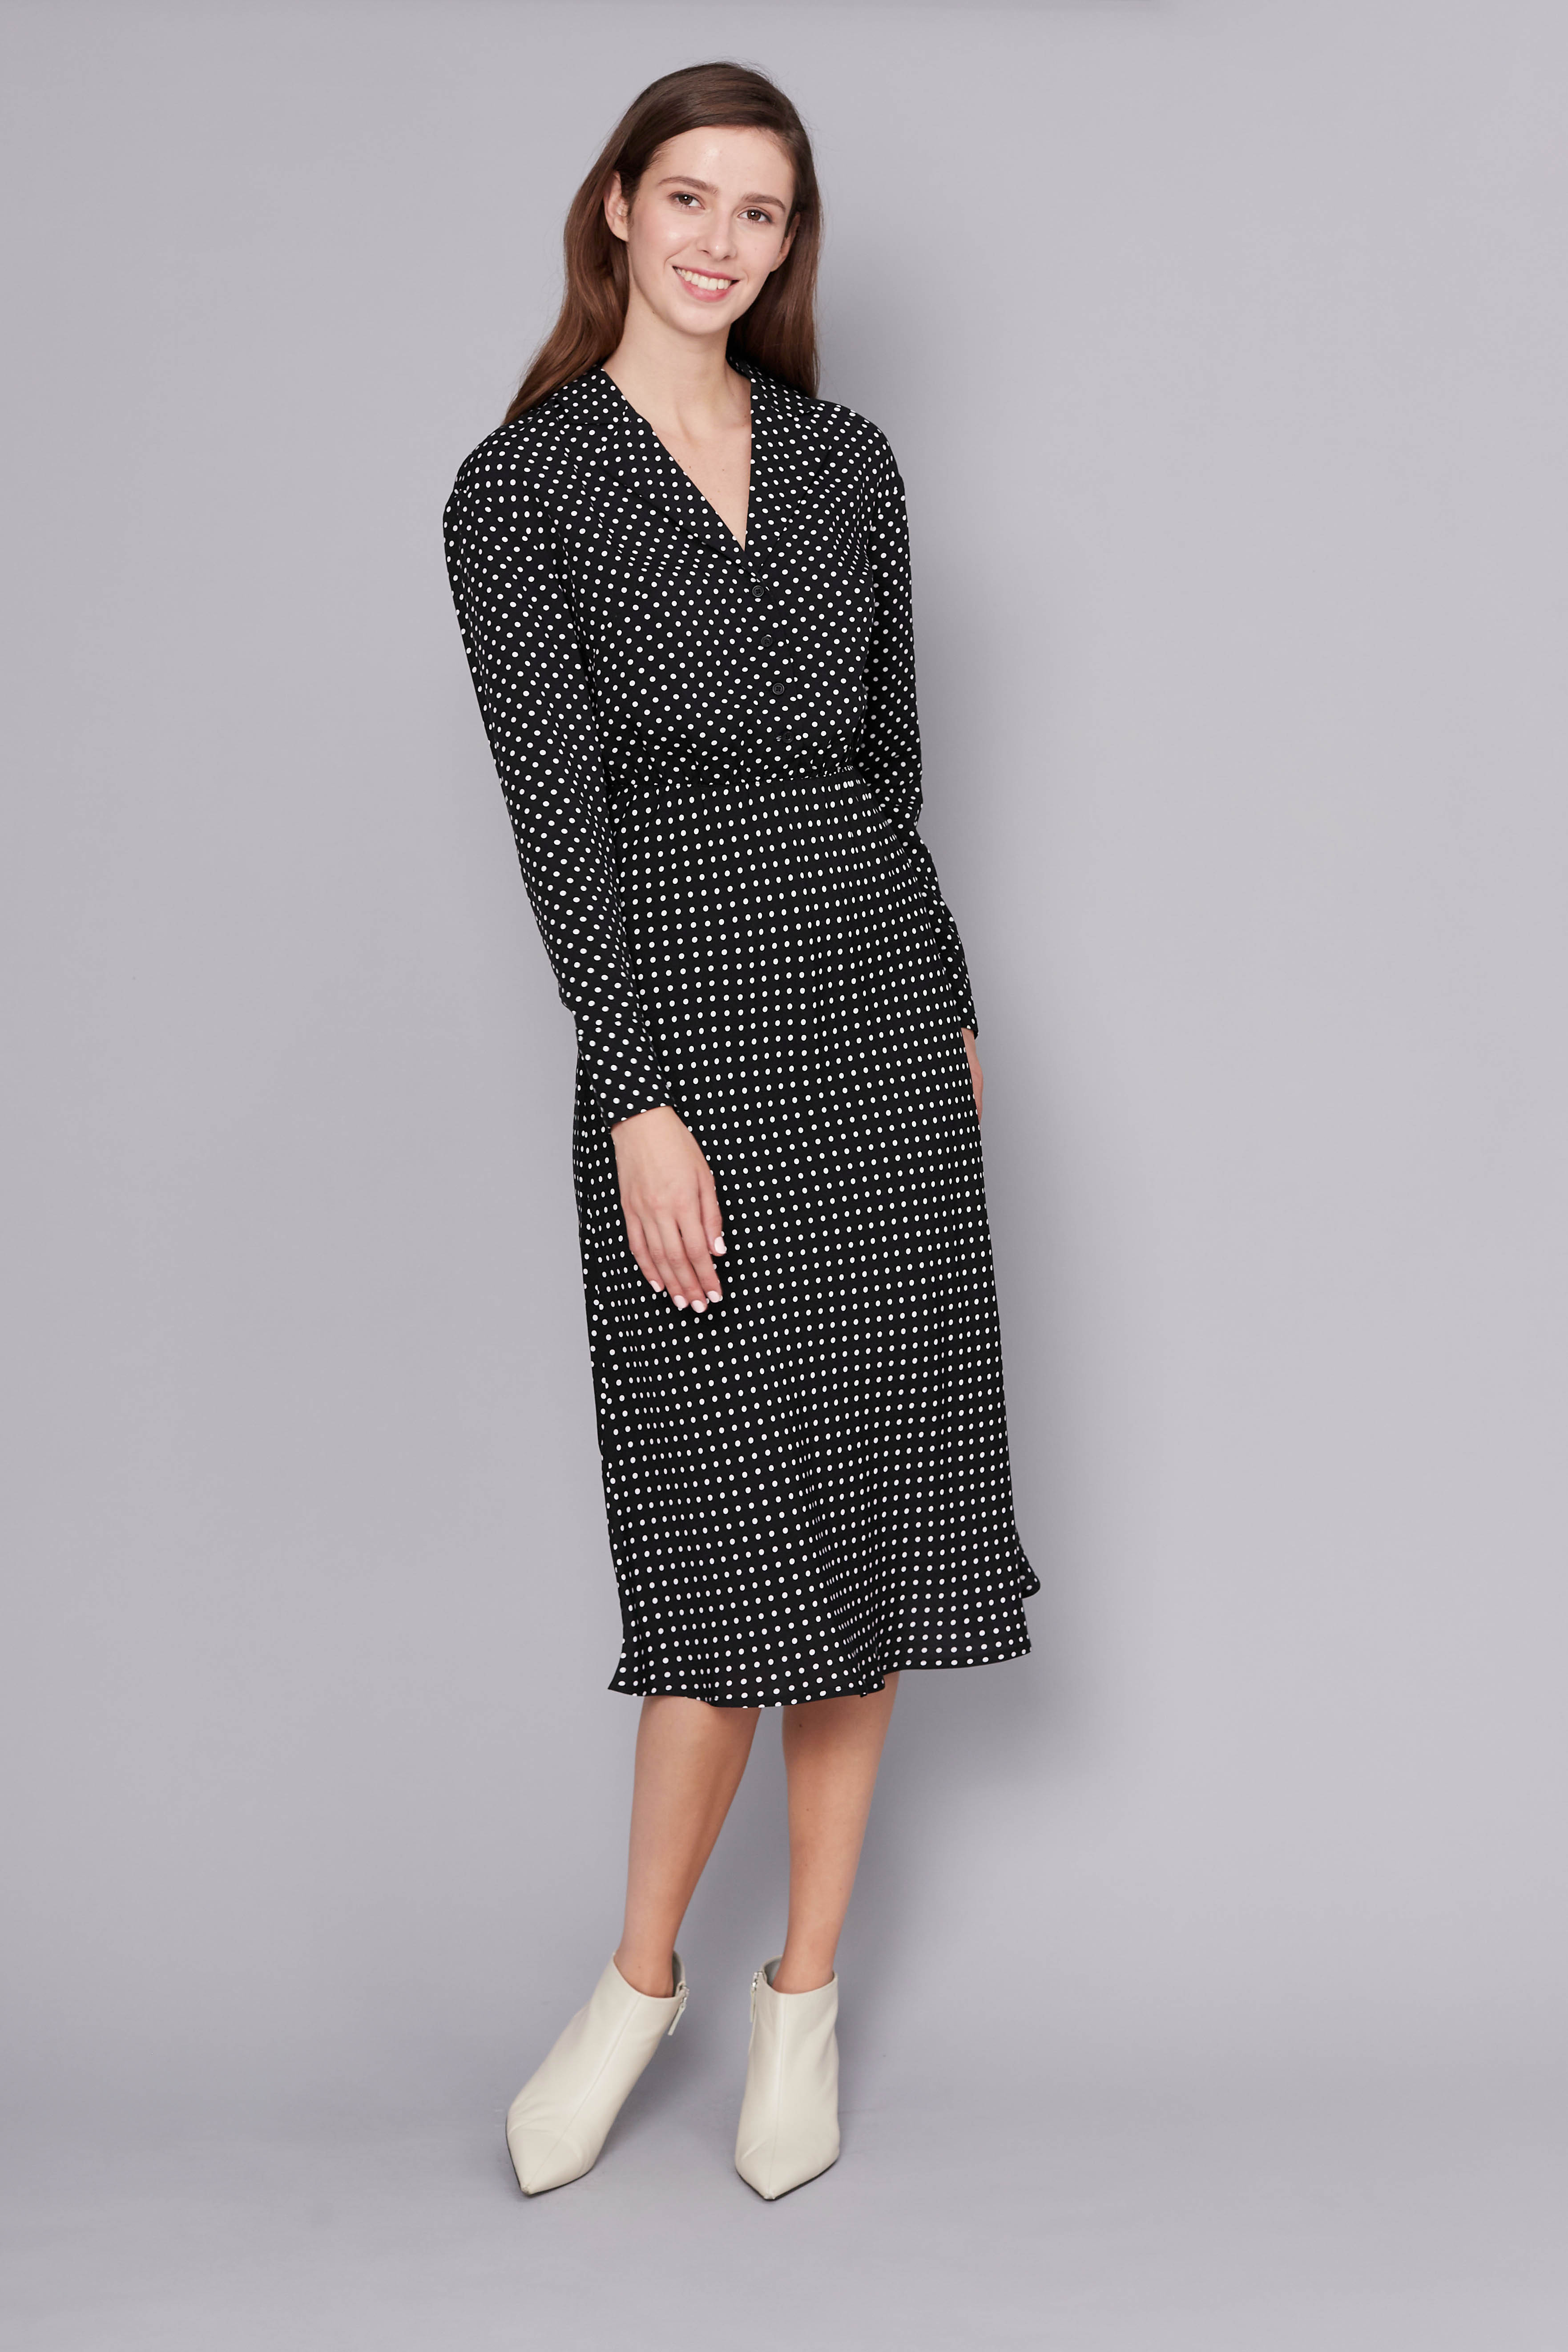 Black polka dot midi dress with buttons, photo 2